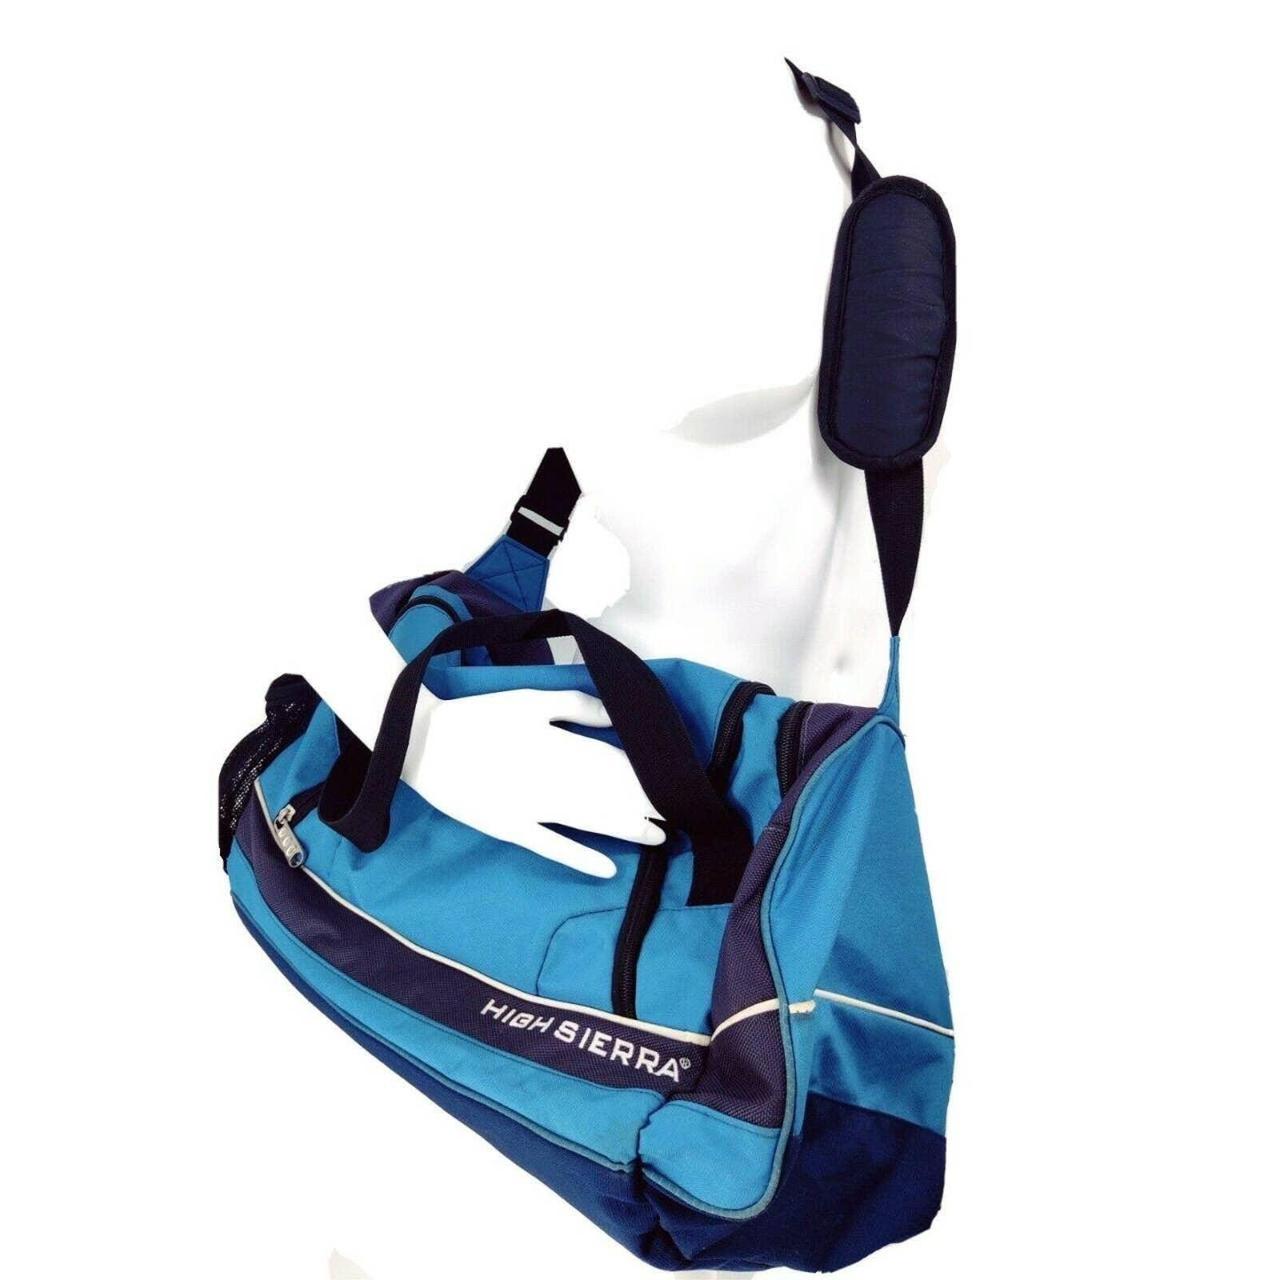 Black and Blue Sports Travel Duffel Bag